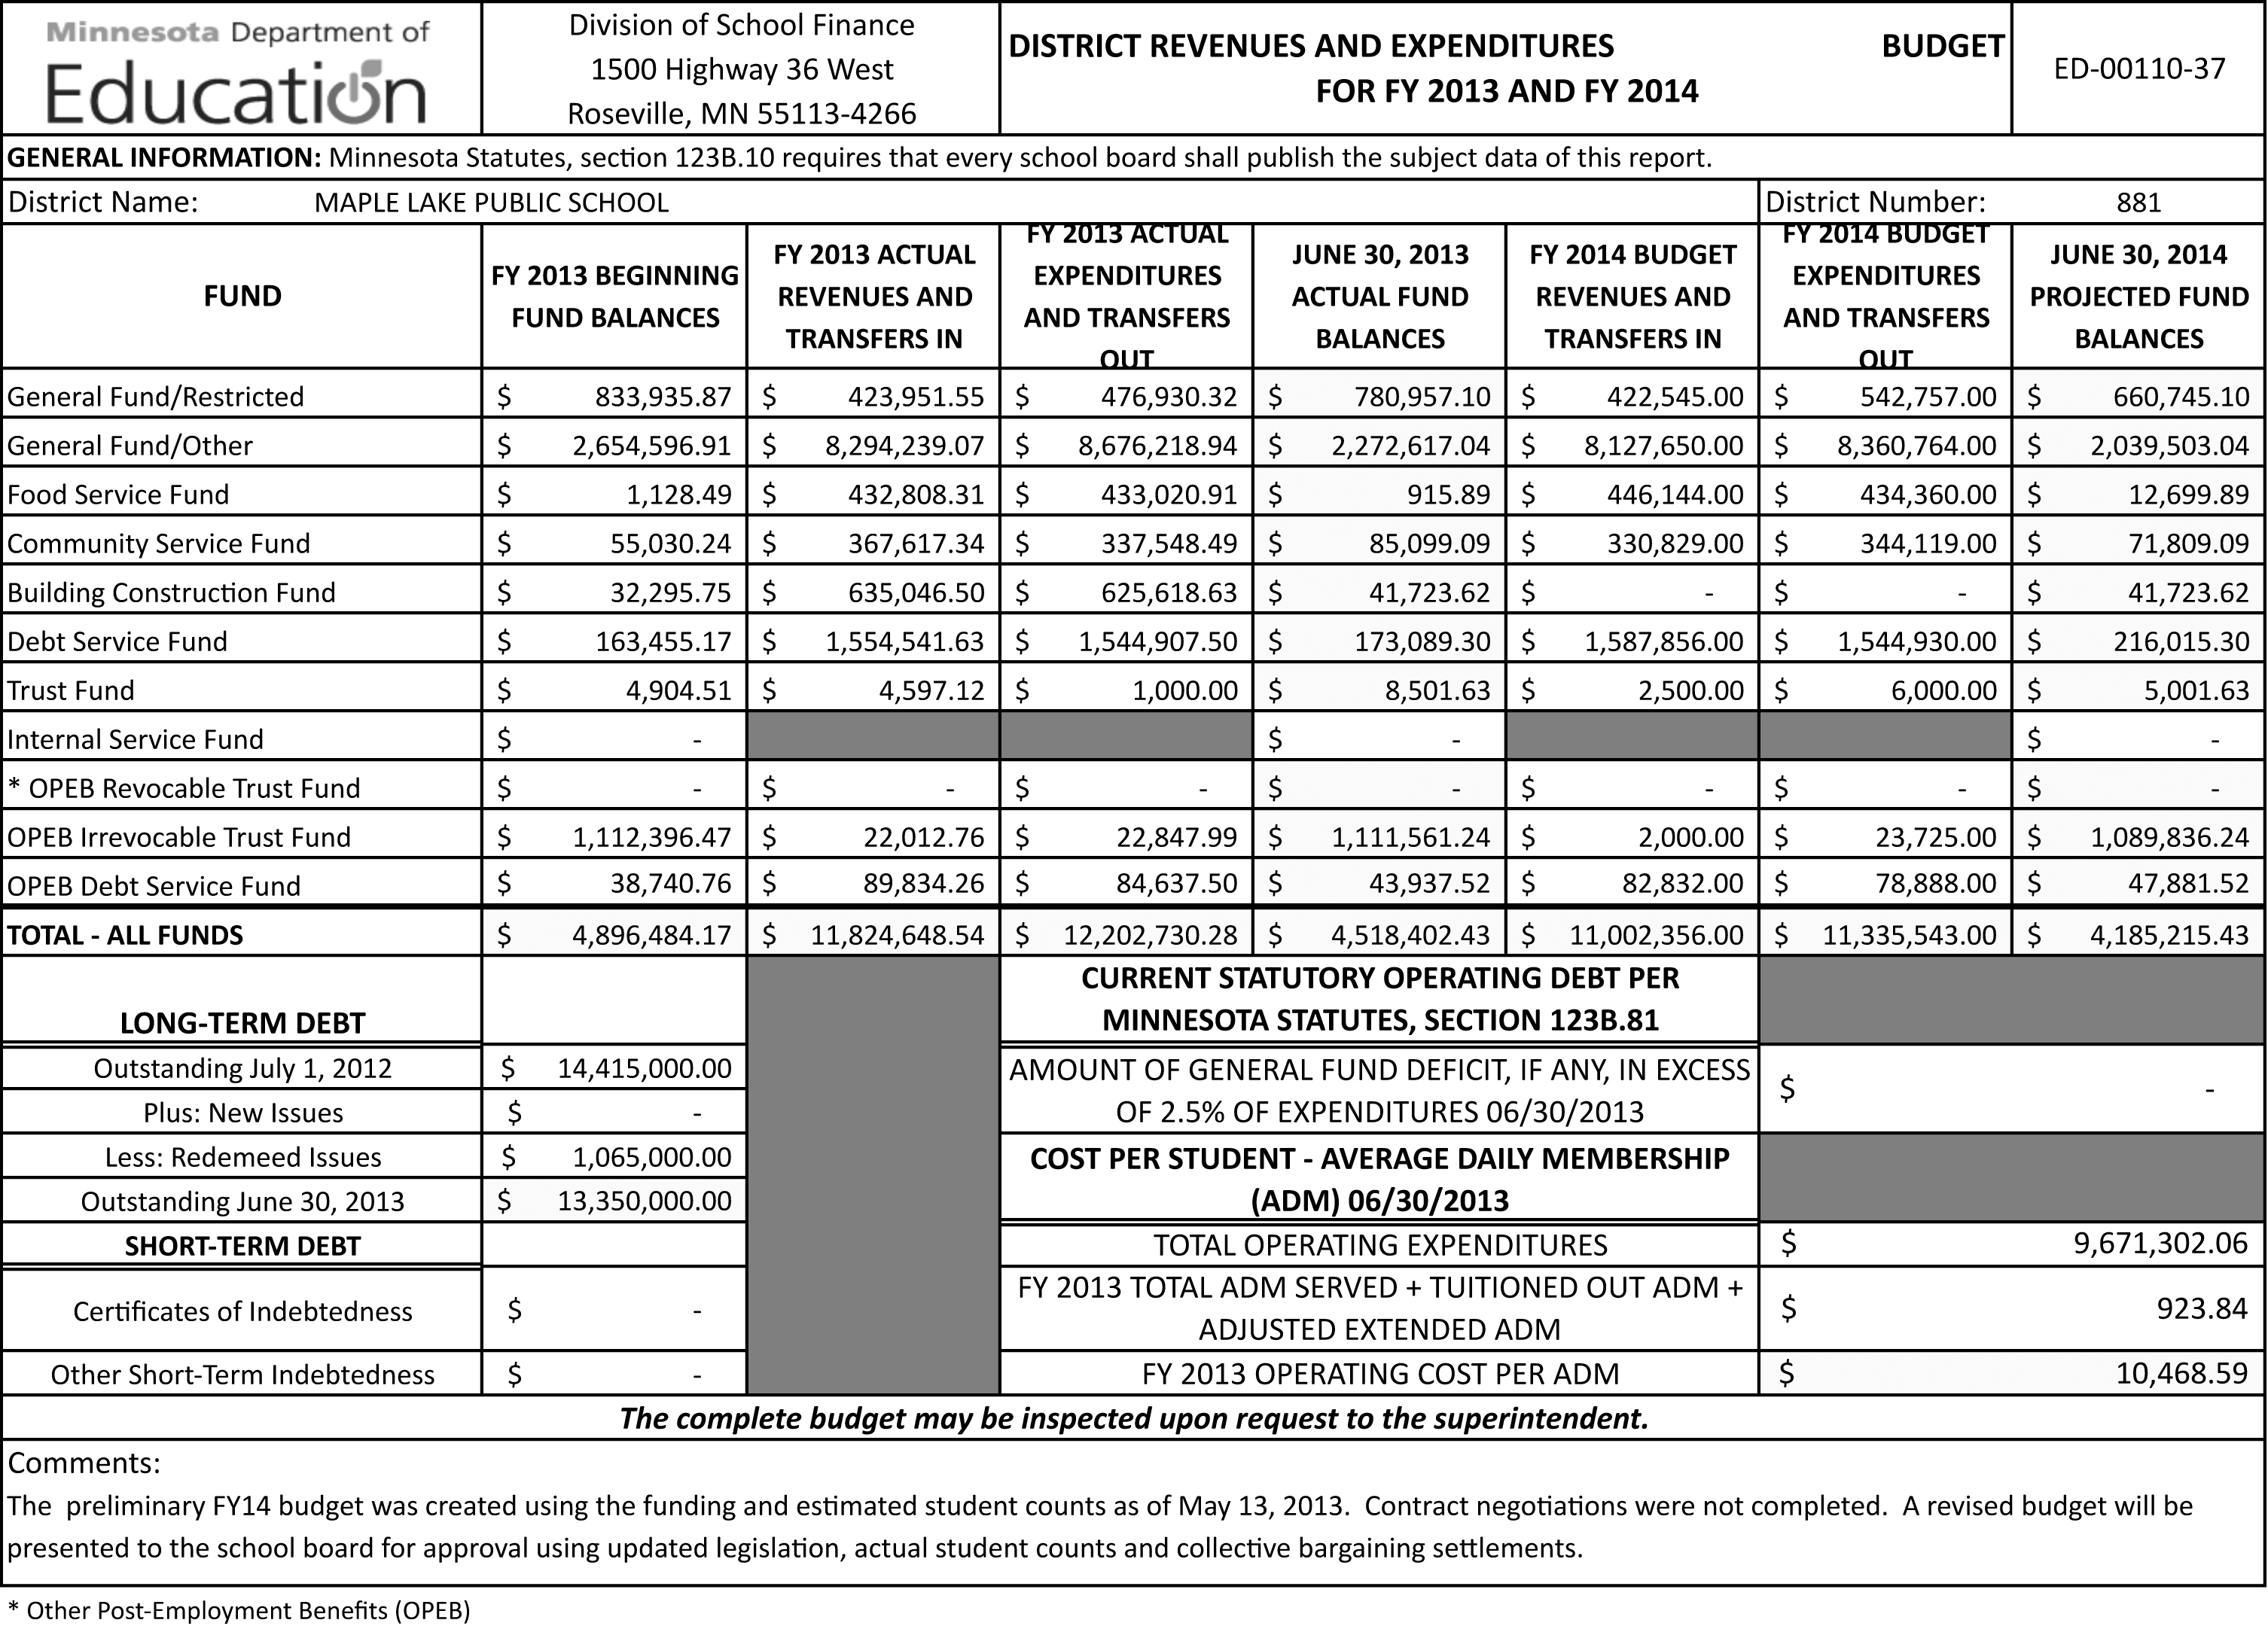 District 881 2013-14 budget.jpg